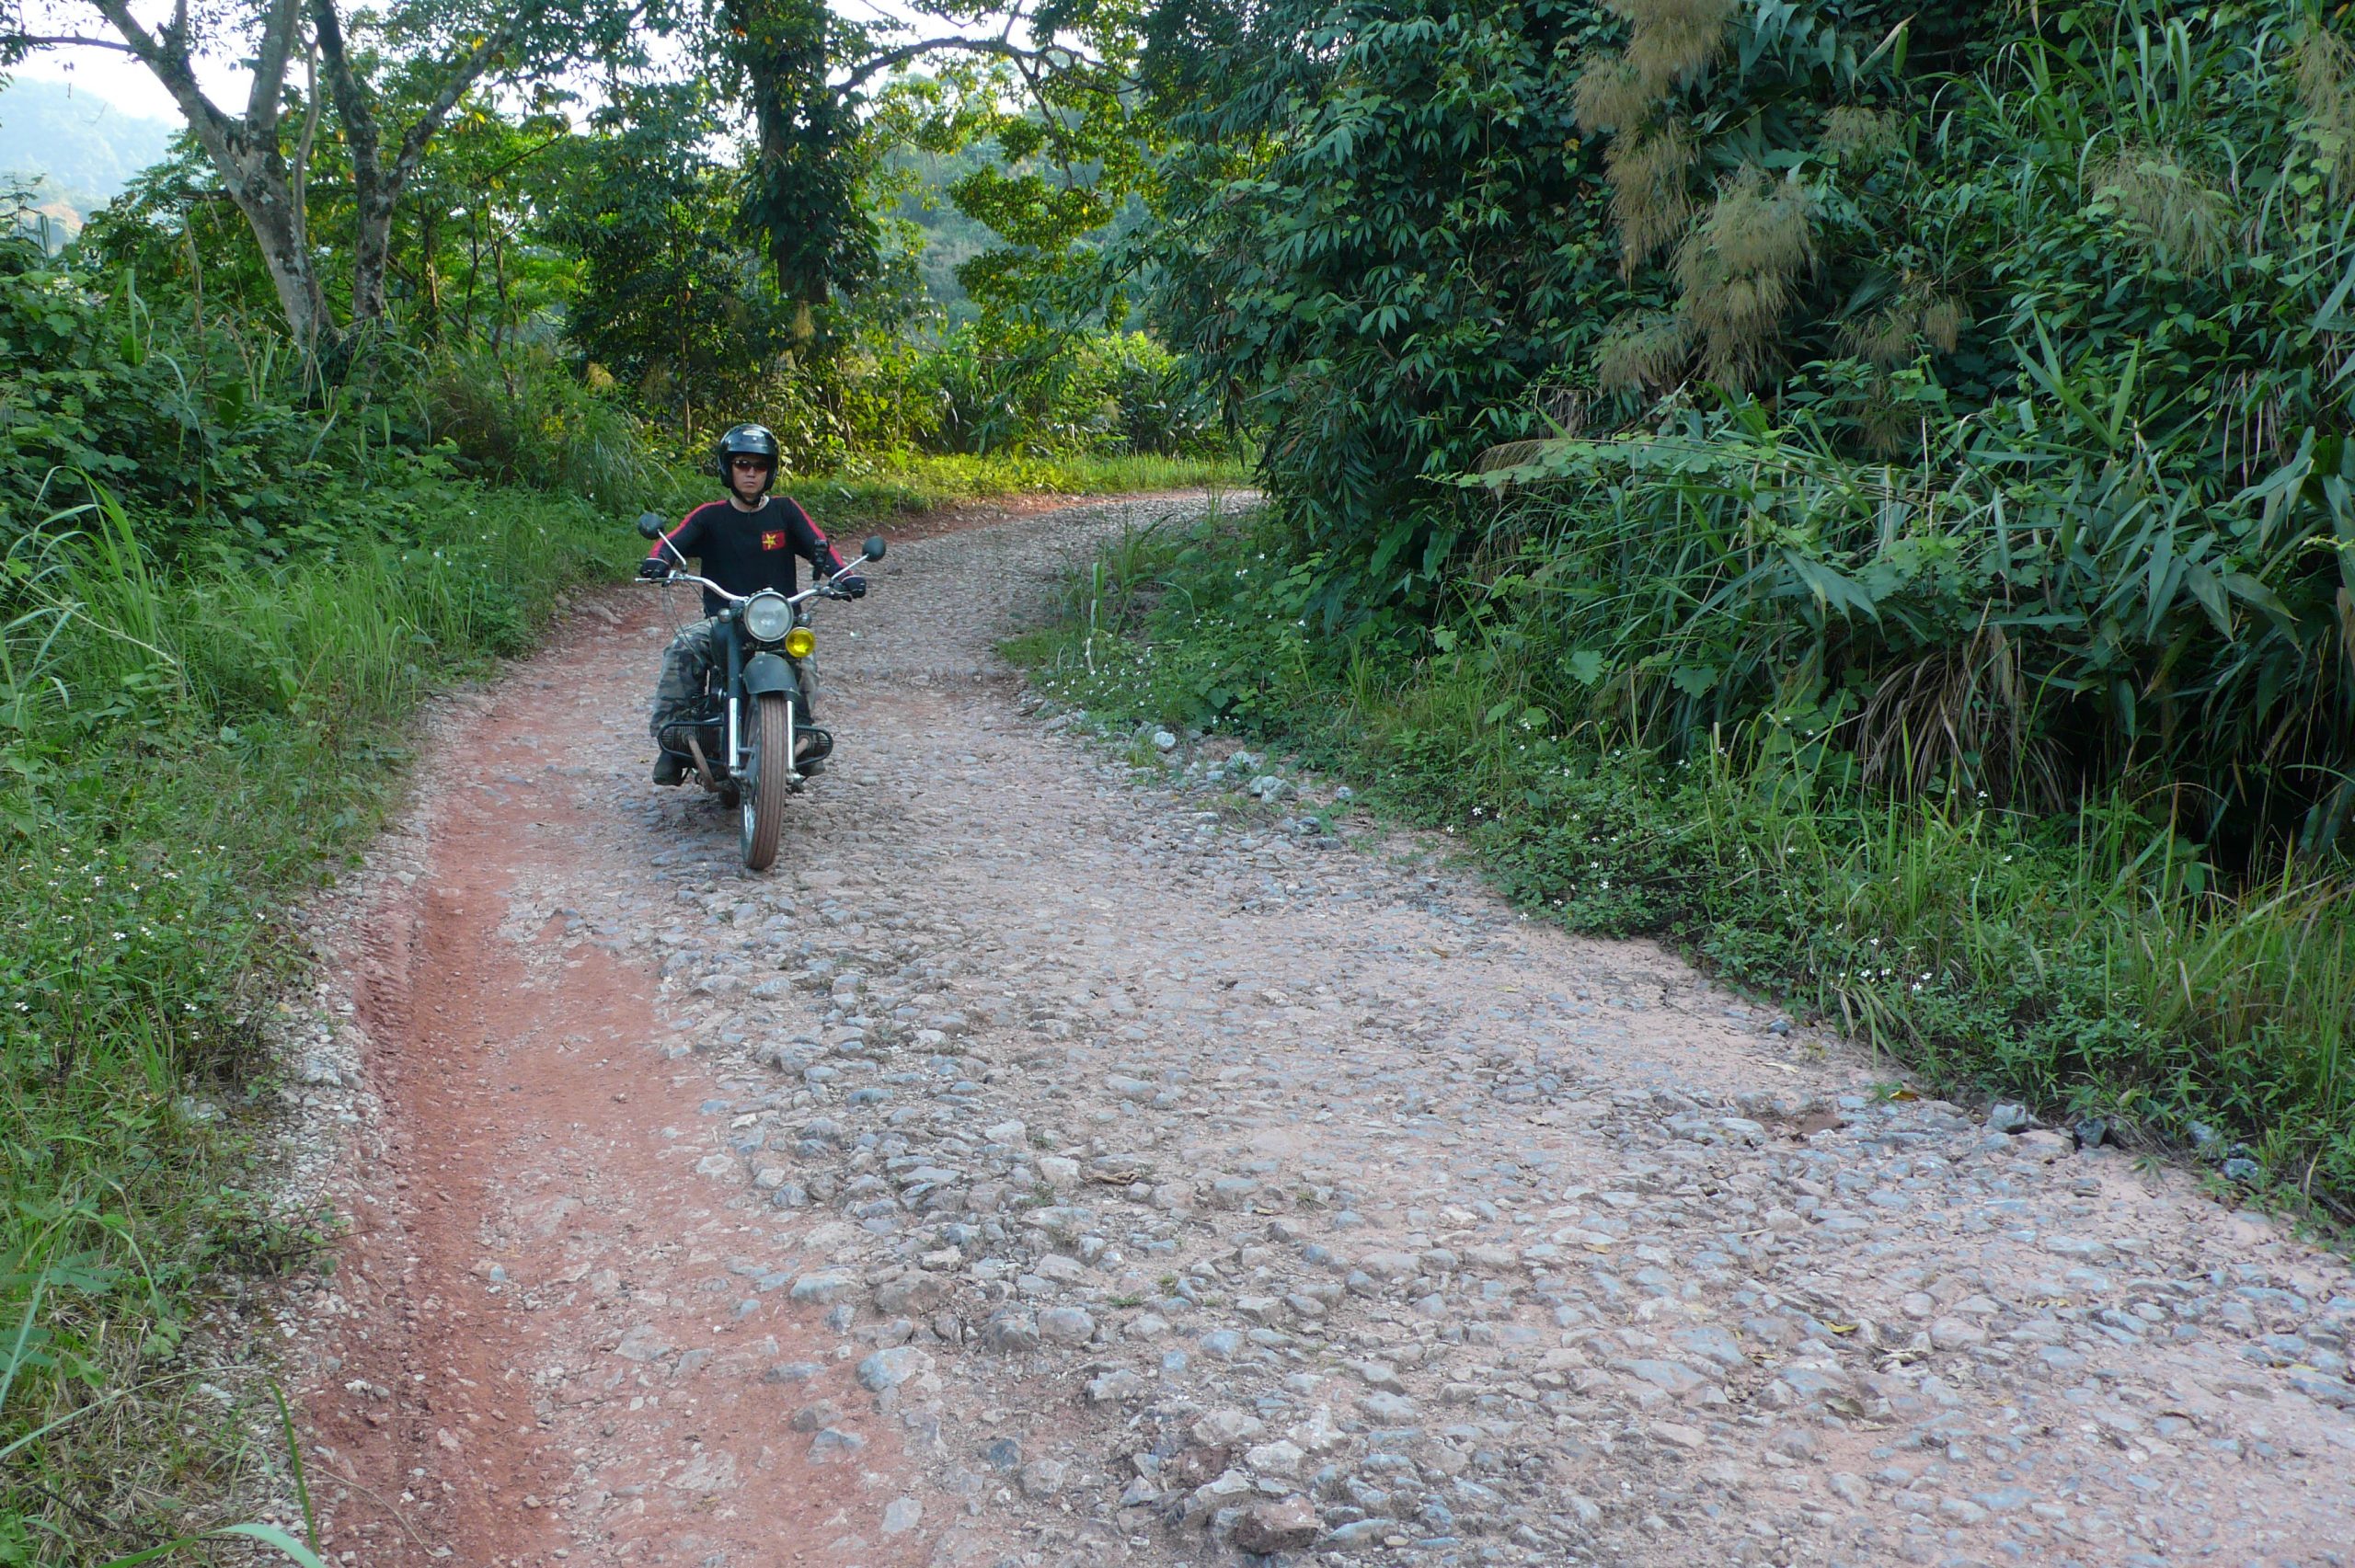 The original Ho Chi Minh Trail